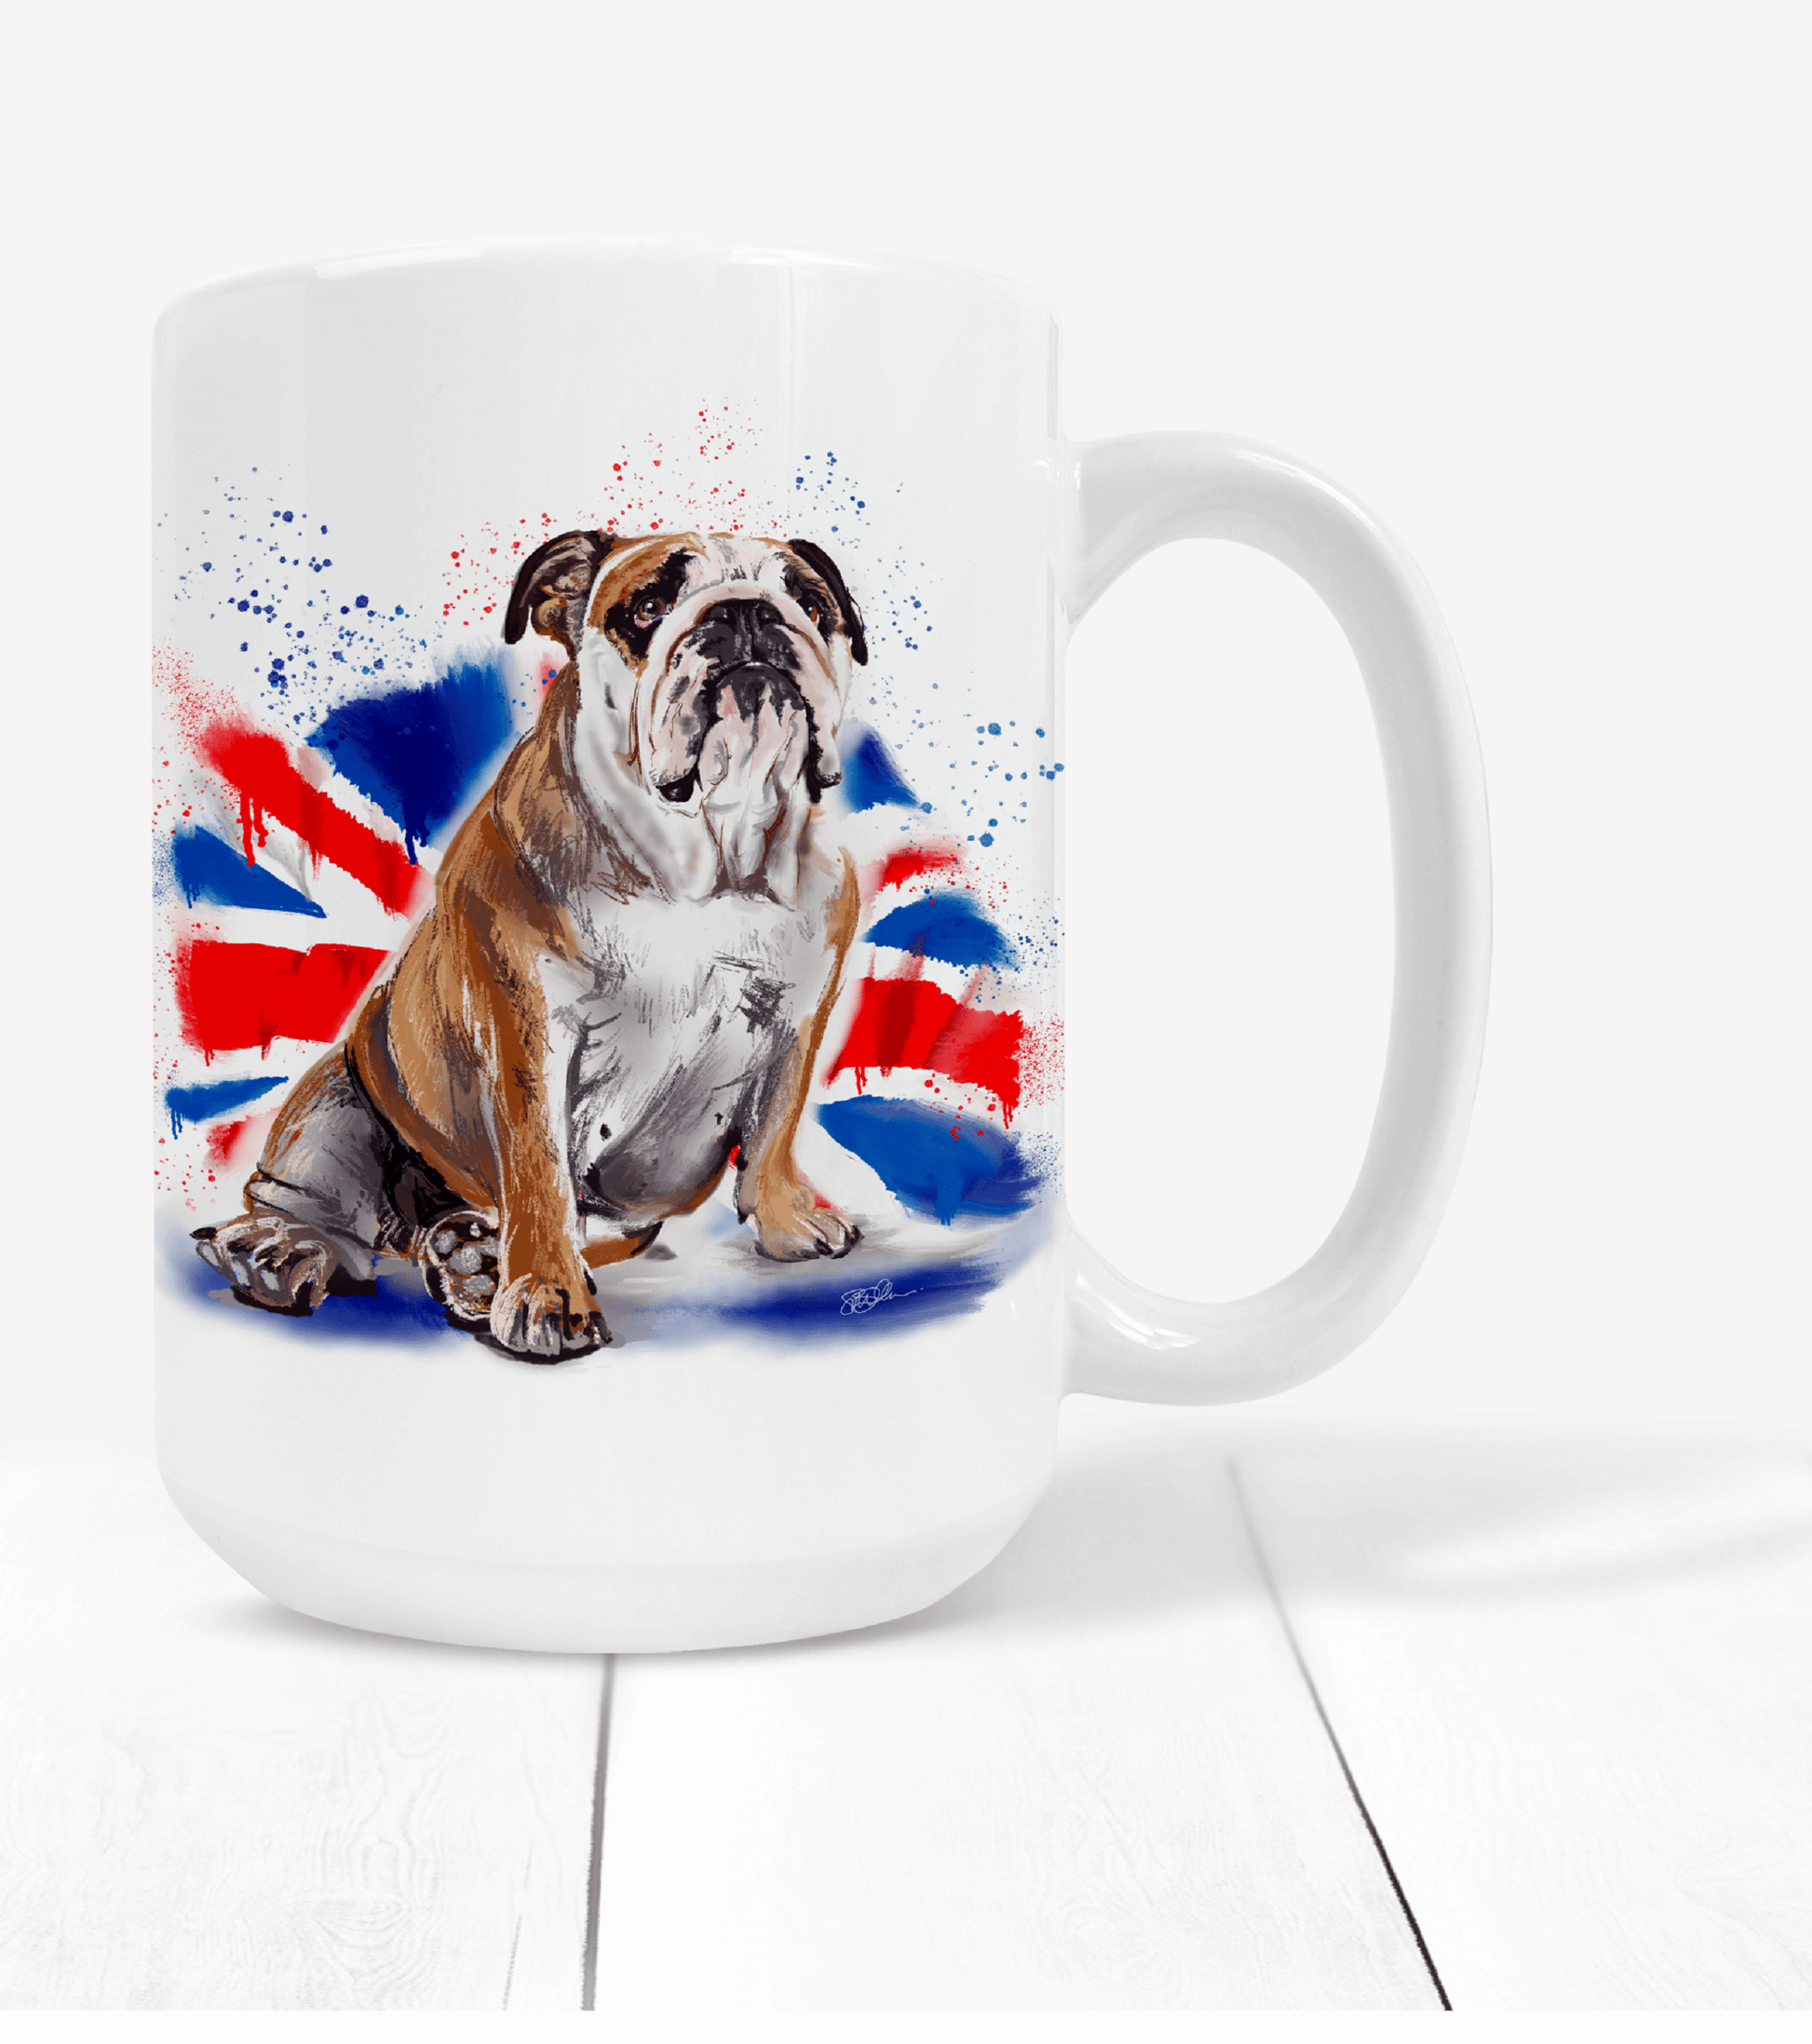  British Bulldog and Flag Coffee Mug by Free Spirit Accessories sold by Free Spirit Accessories